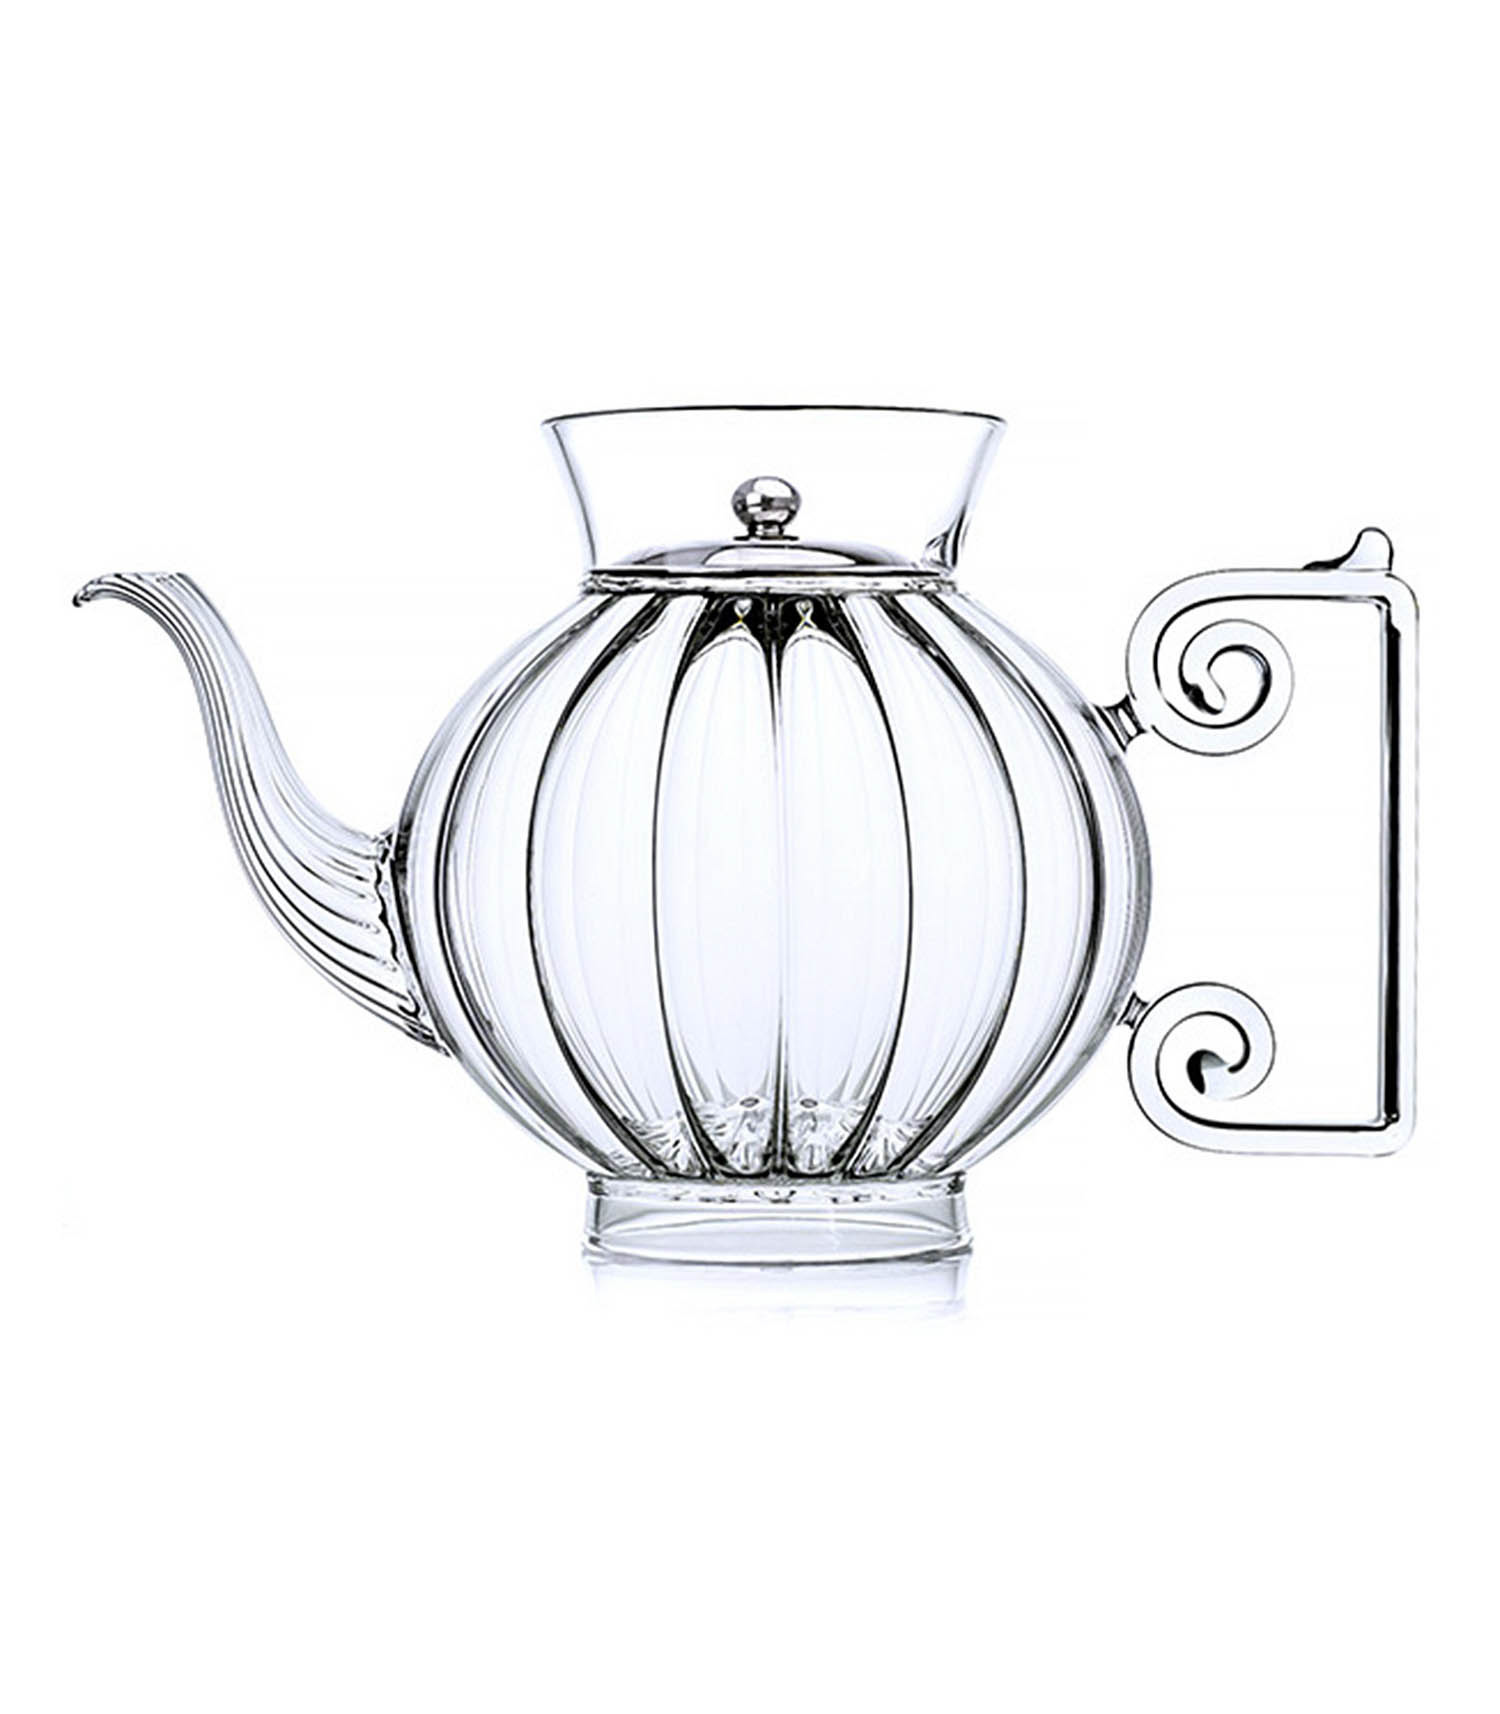 Blown glass teapot Love Story - 8 cups